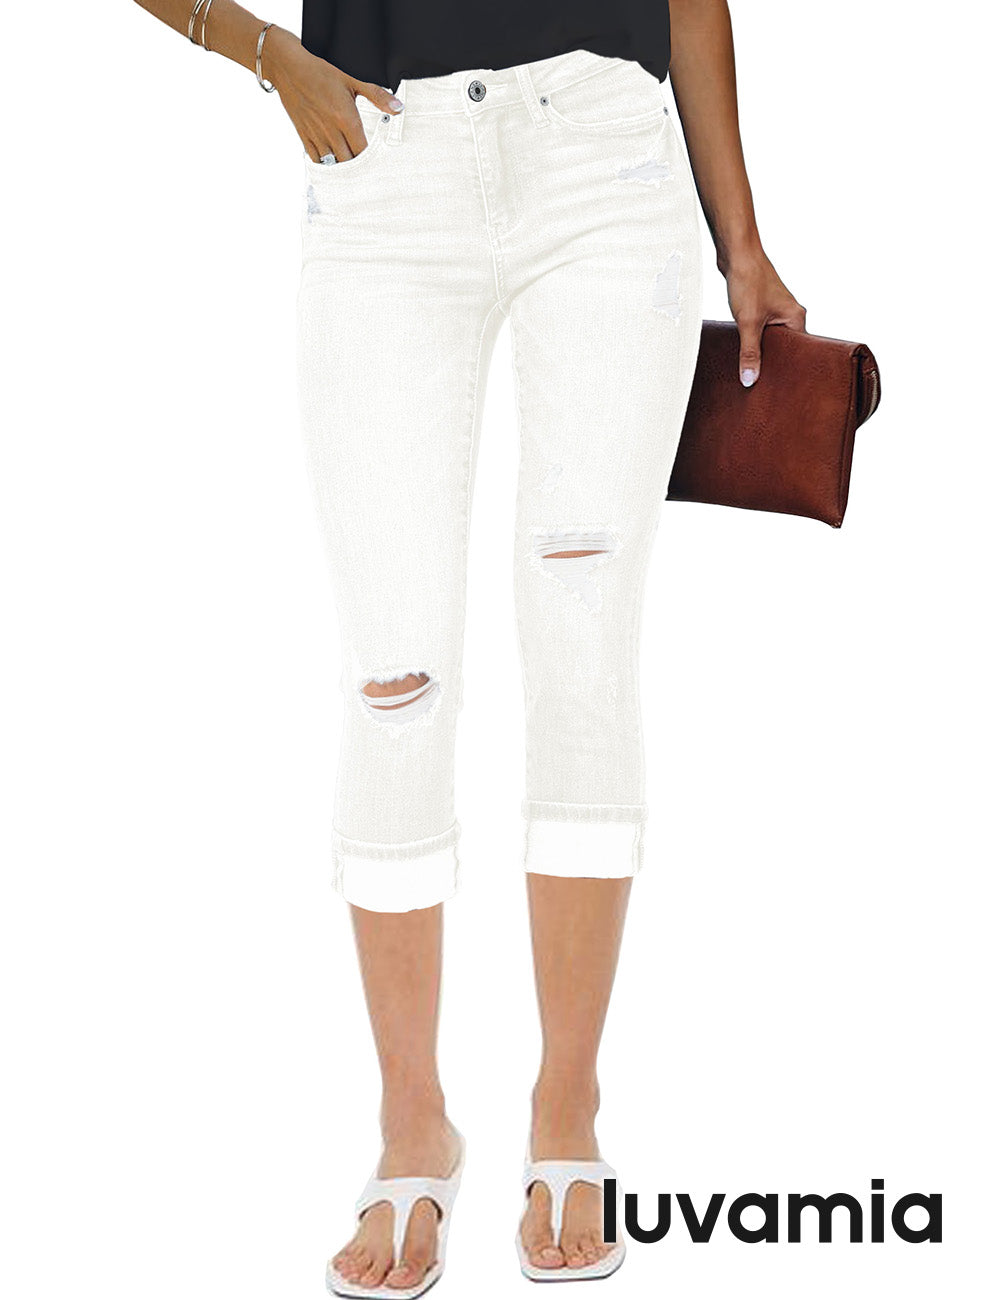 Capri Jeans for Women - High Waist Skinny Stretch Denim Capri Pant